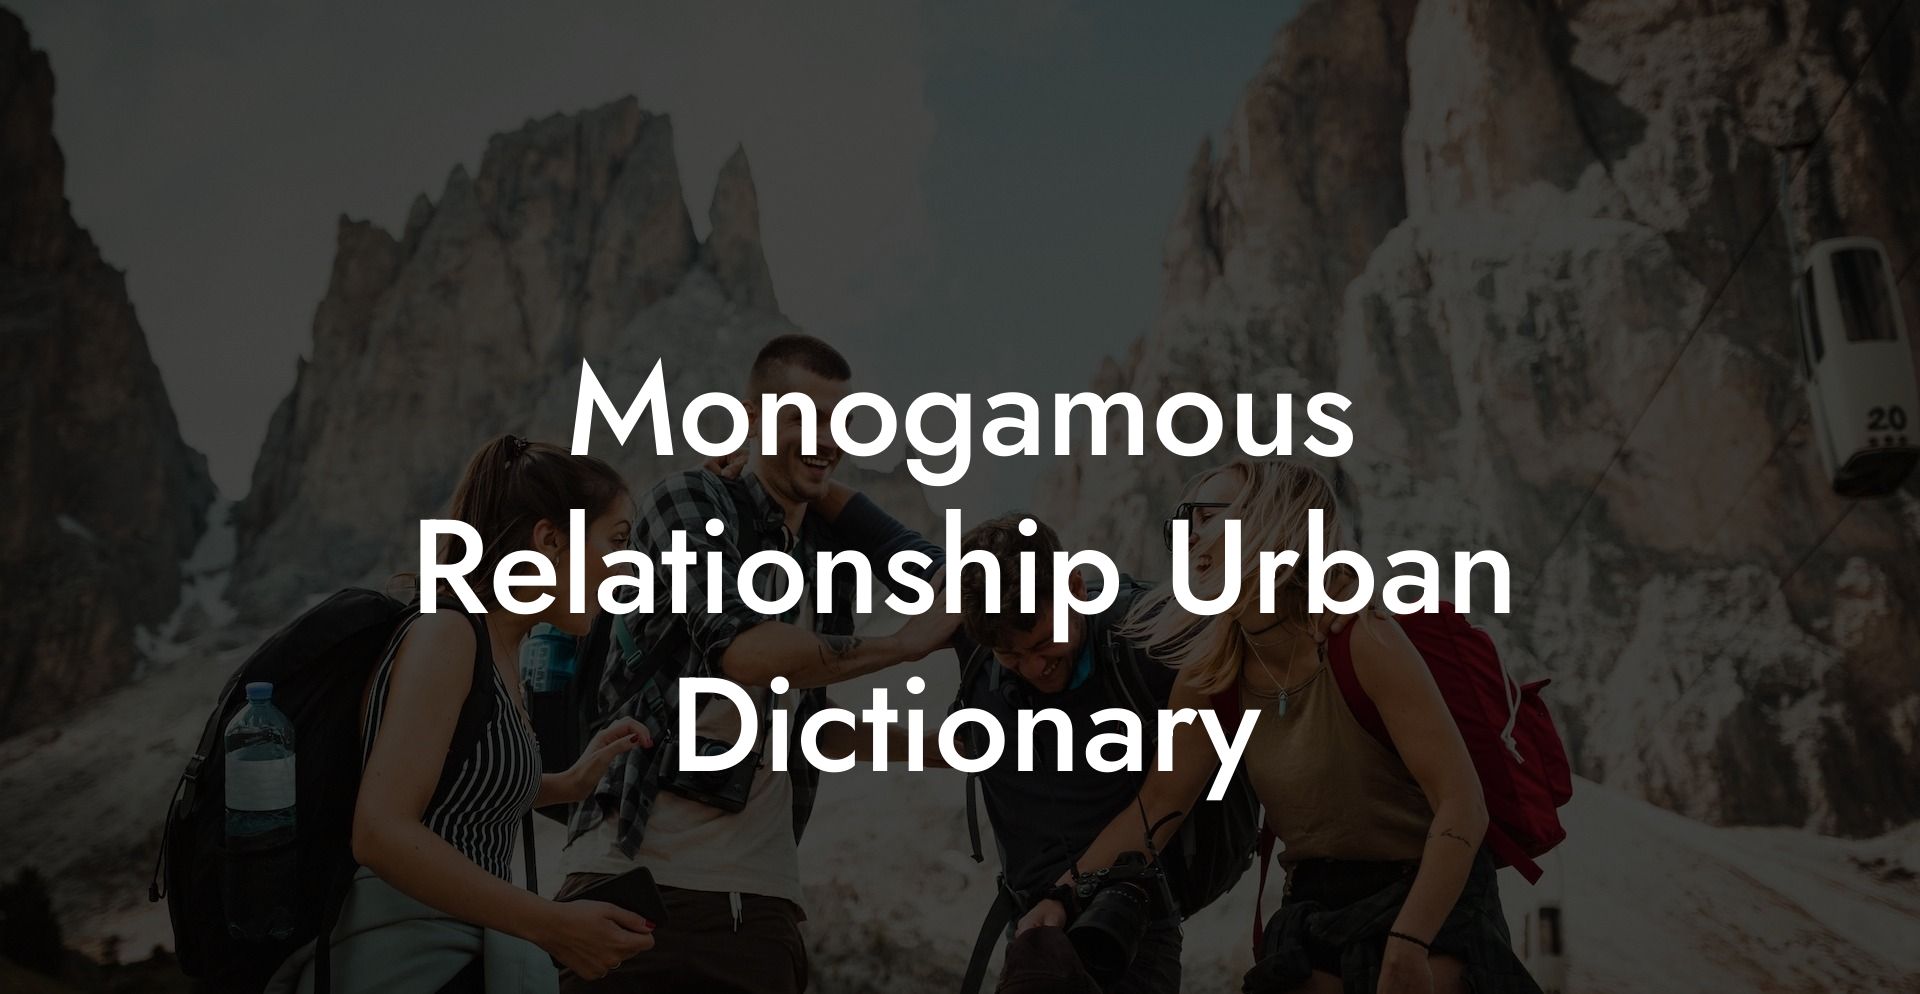 Monogamous Relationship Urban Dictionary